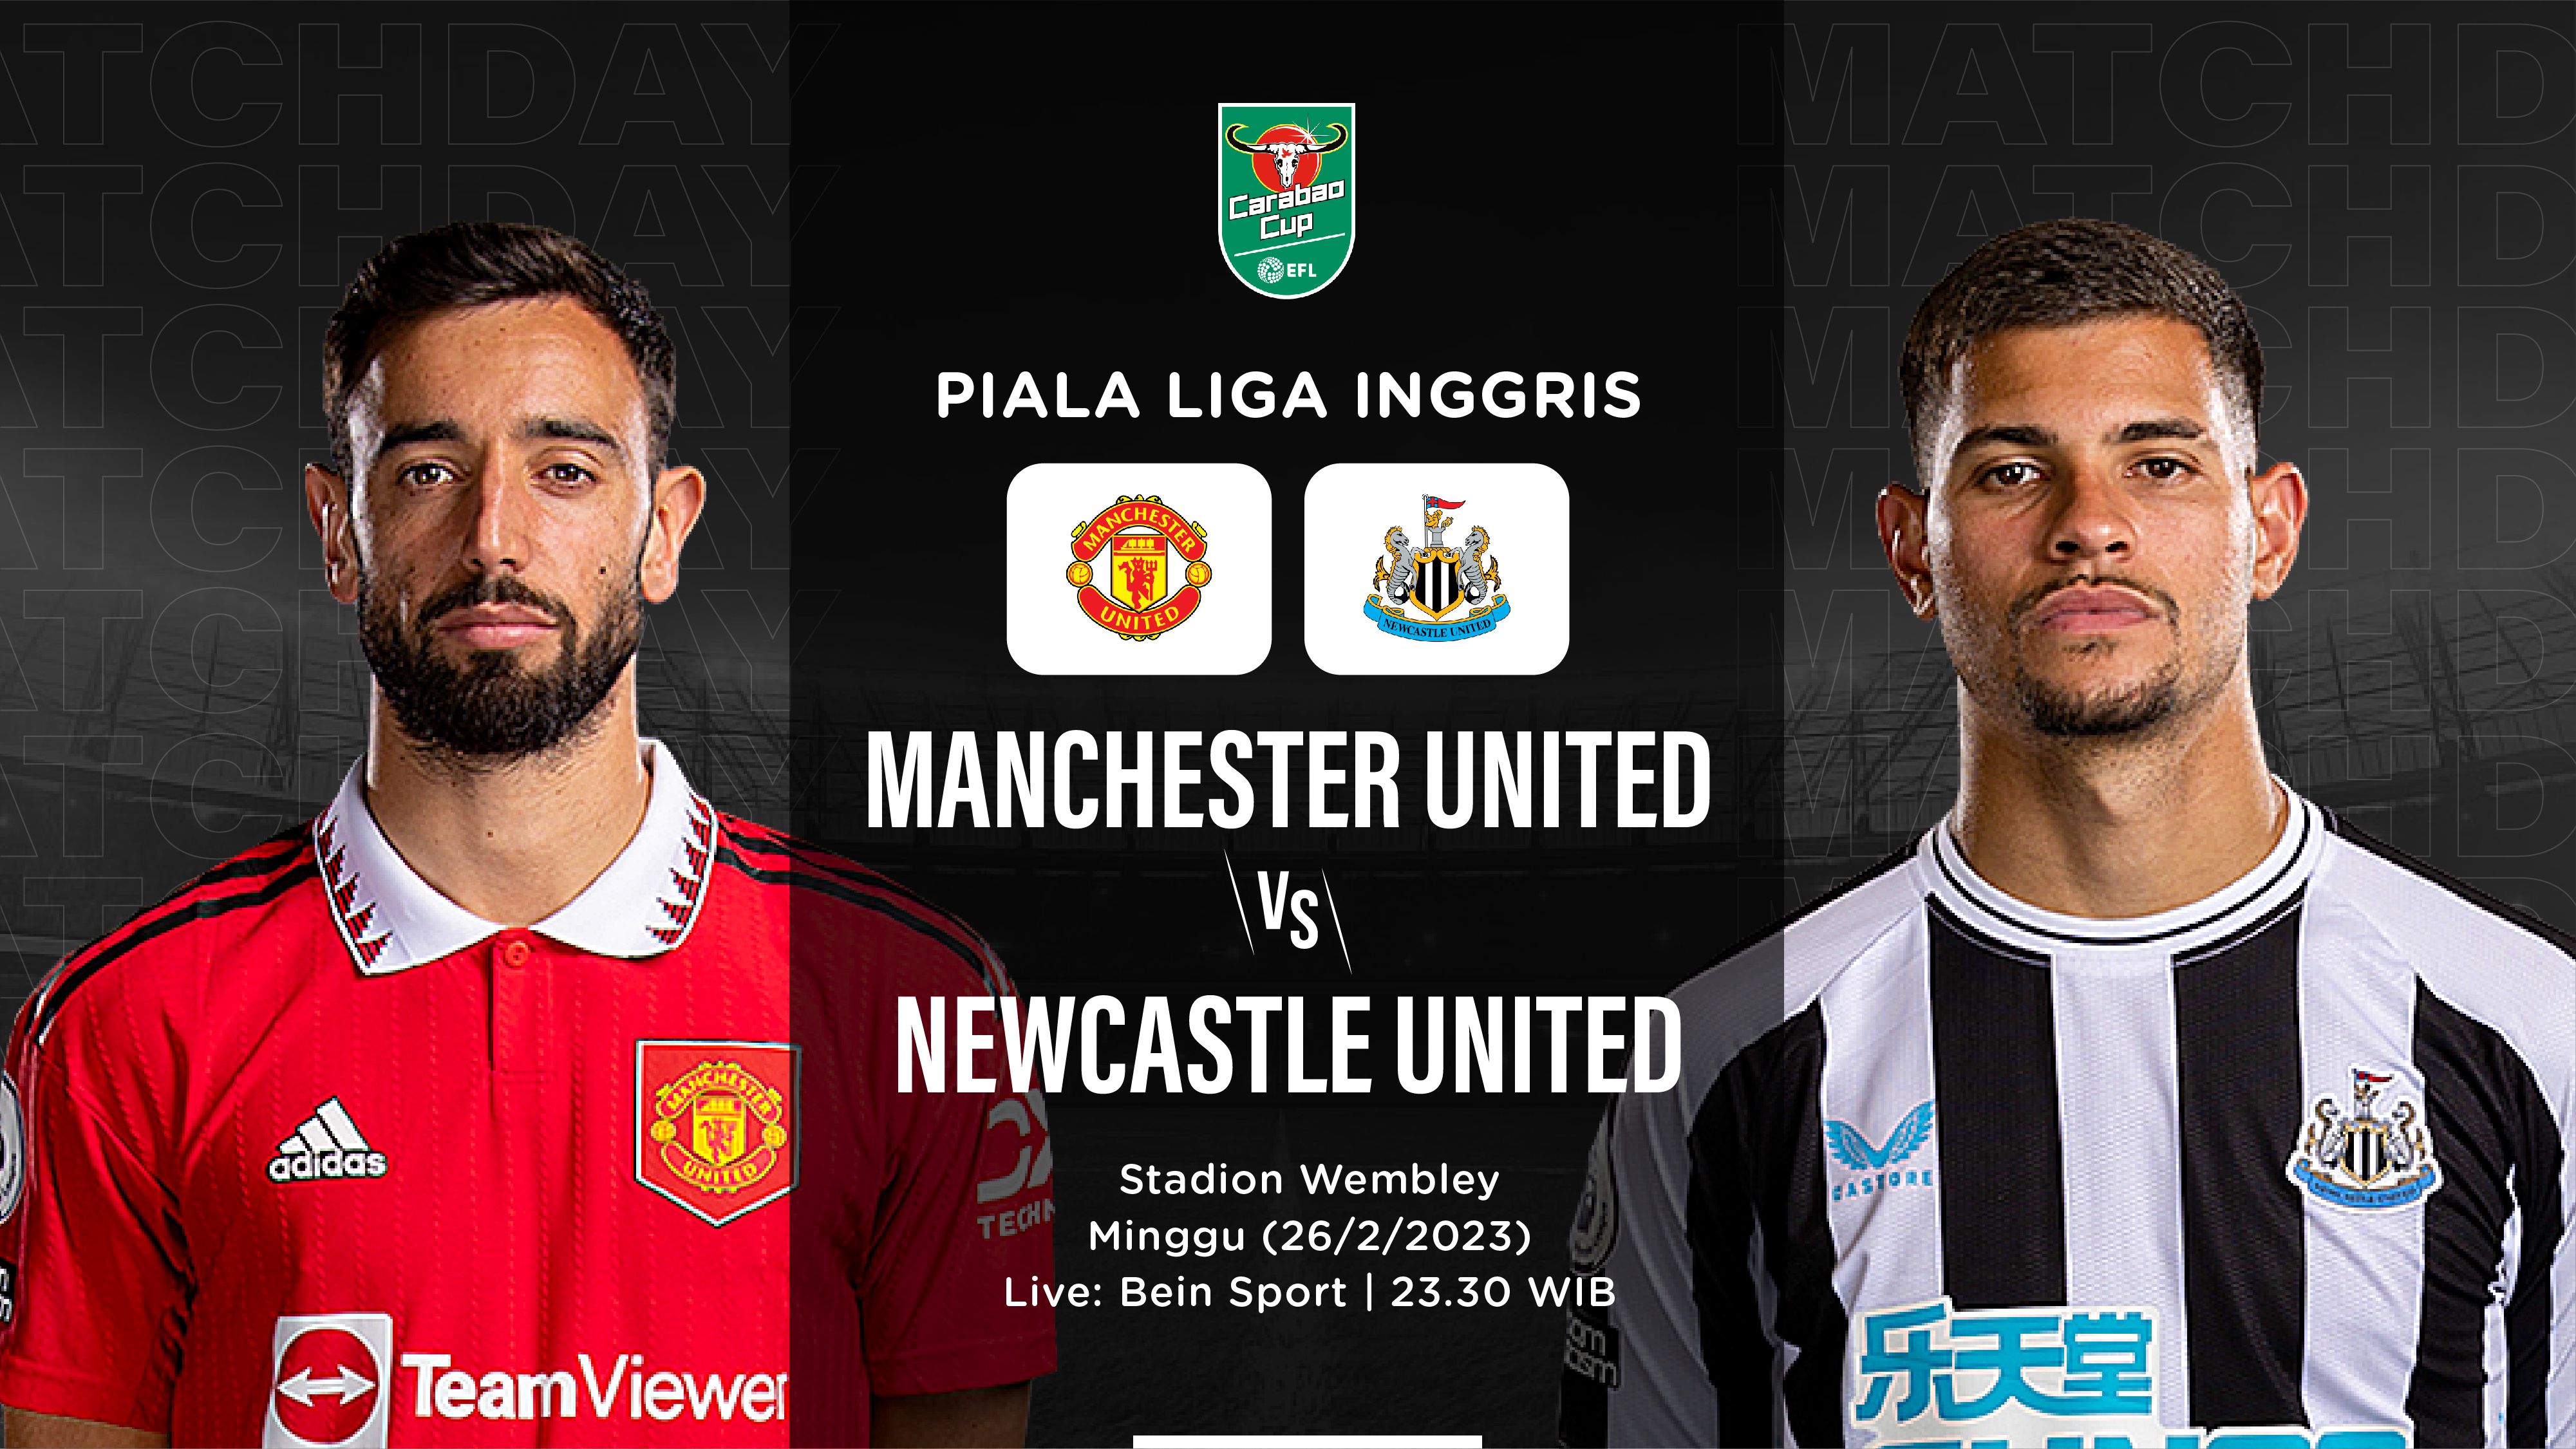 Prediksi dan Link Live Streaming Manchester United vs Newcastle United di Piala Liga Inggris